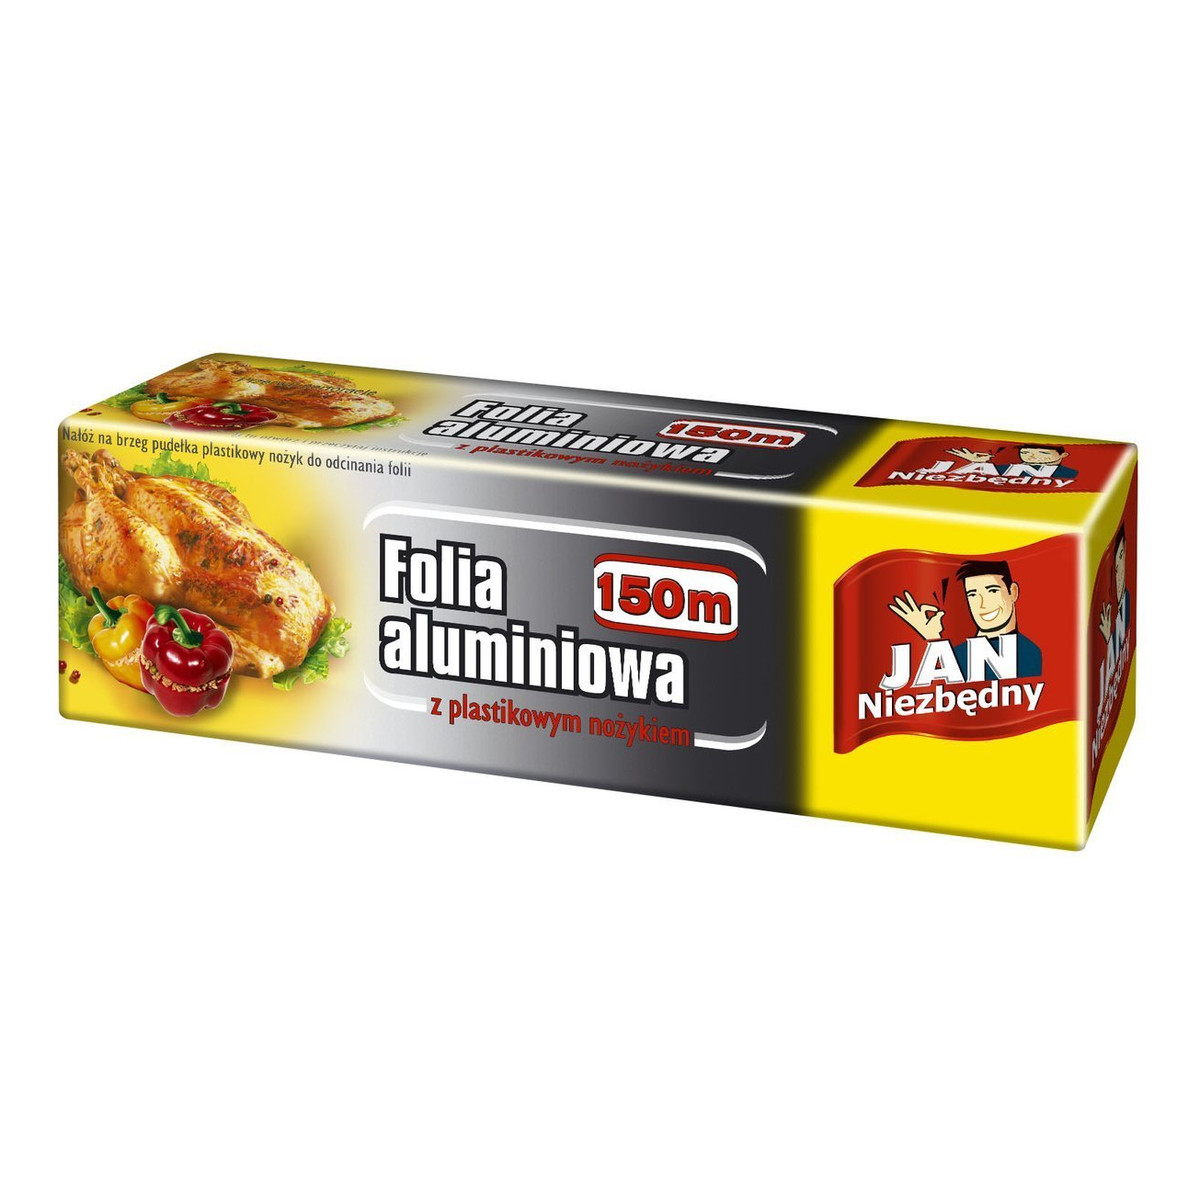 Jan Niezbędny Folia aluminiowa w pudełku 150m 1op.